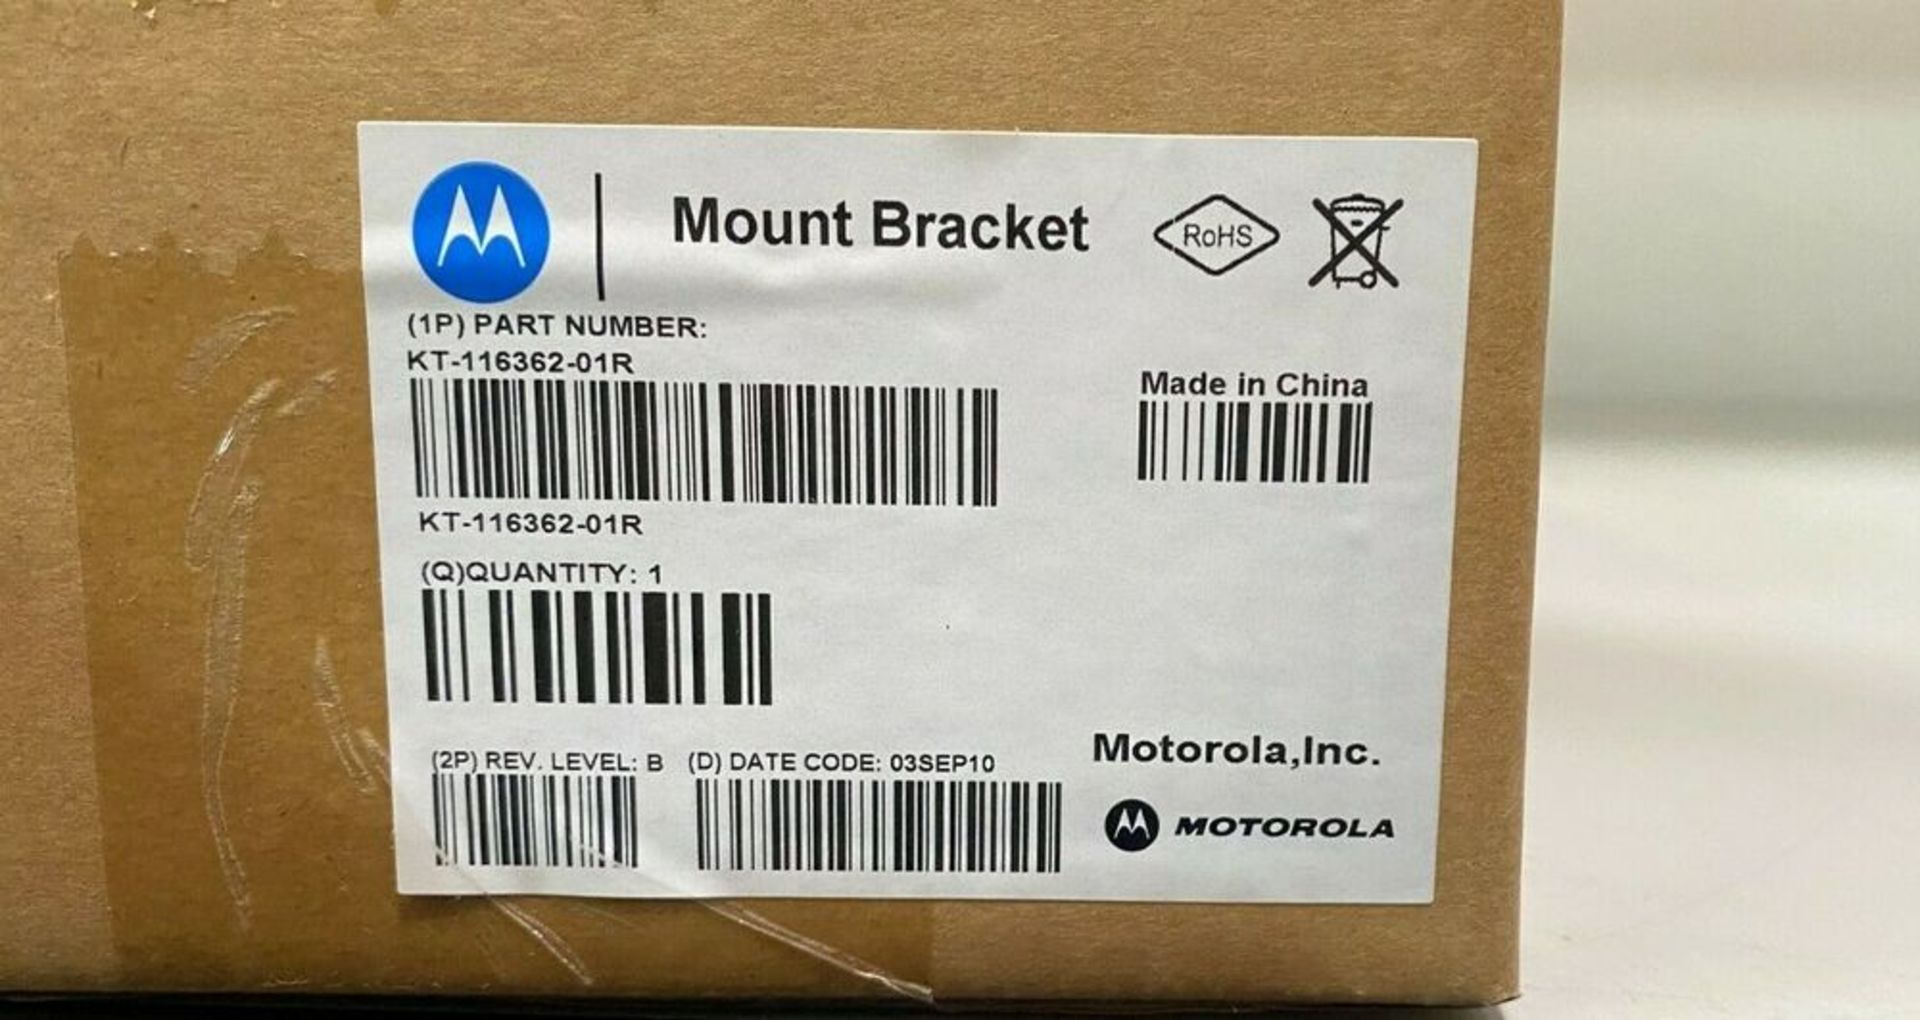 Motorola KT-116362-01R Mount Bracket - Wall Mount Kit for Battery Charger Cradle - Image 8 of 8